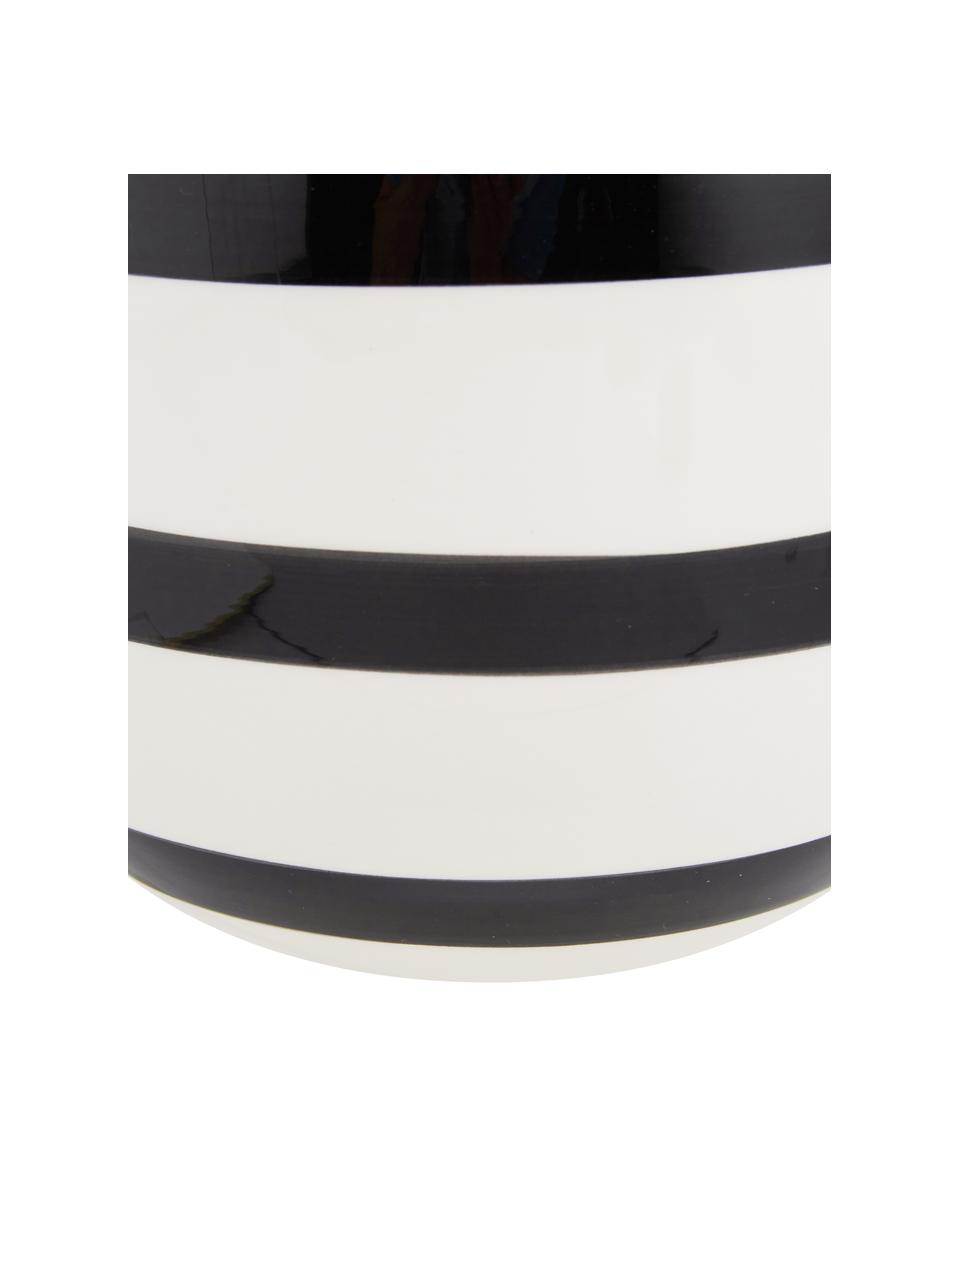 Handgefertigte Keramik-Vase Omaggio, Keramik, Weiß, Schwarz, Ø 17 x H 20 cm